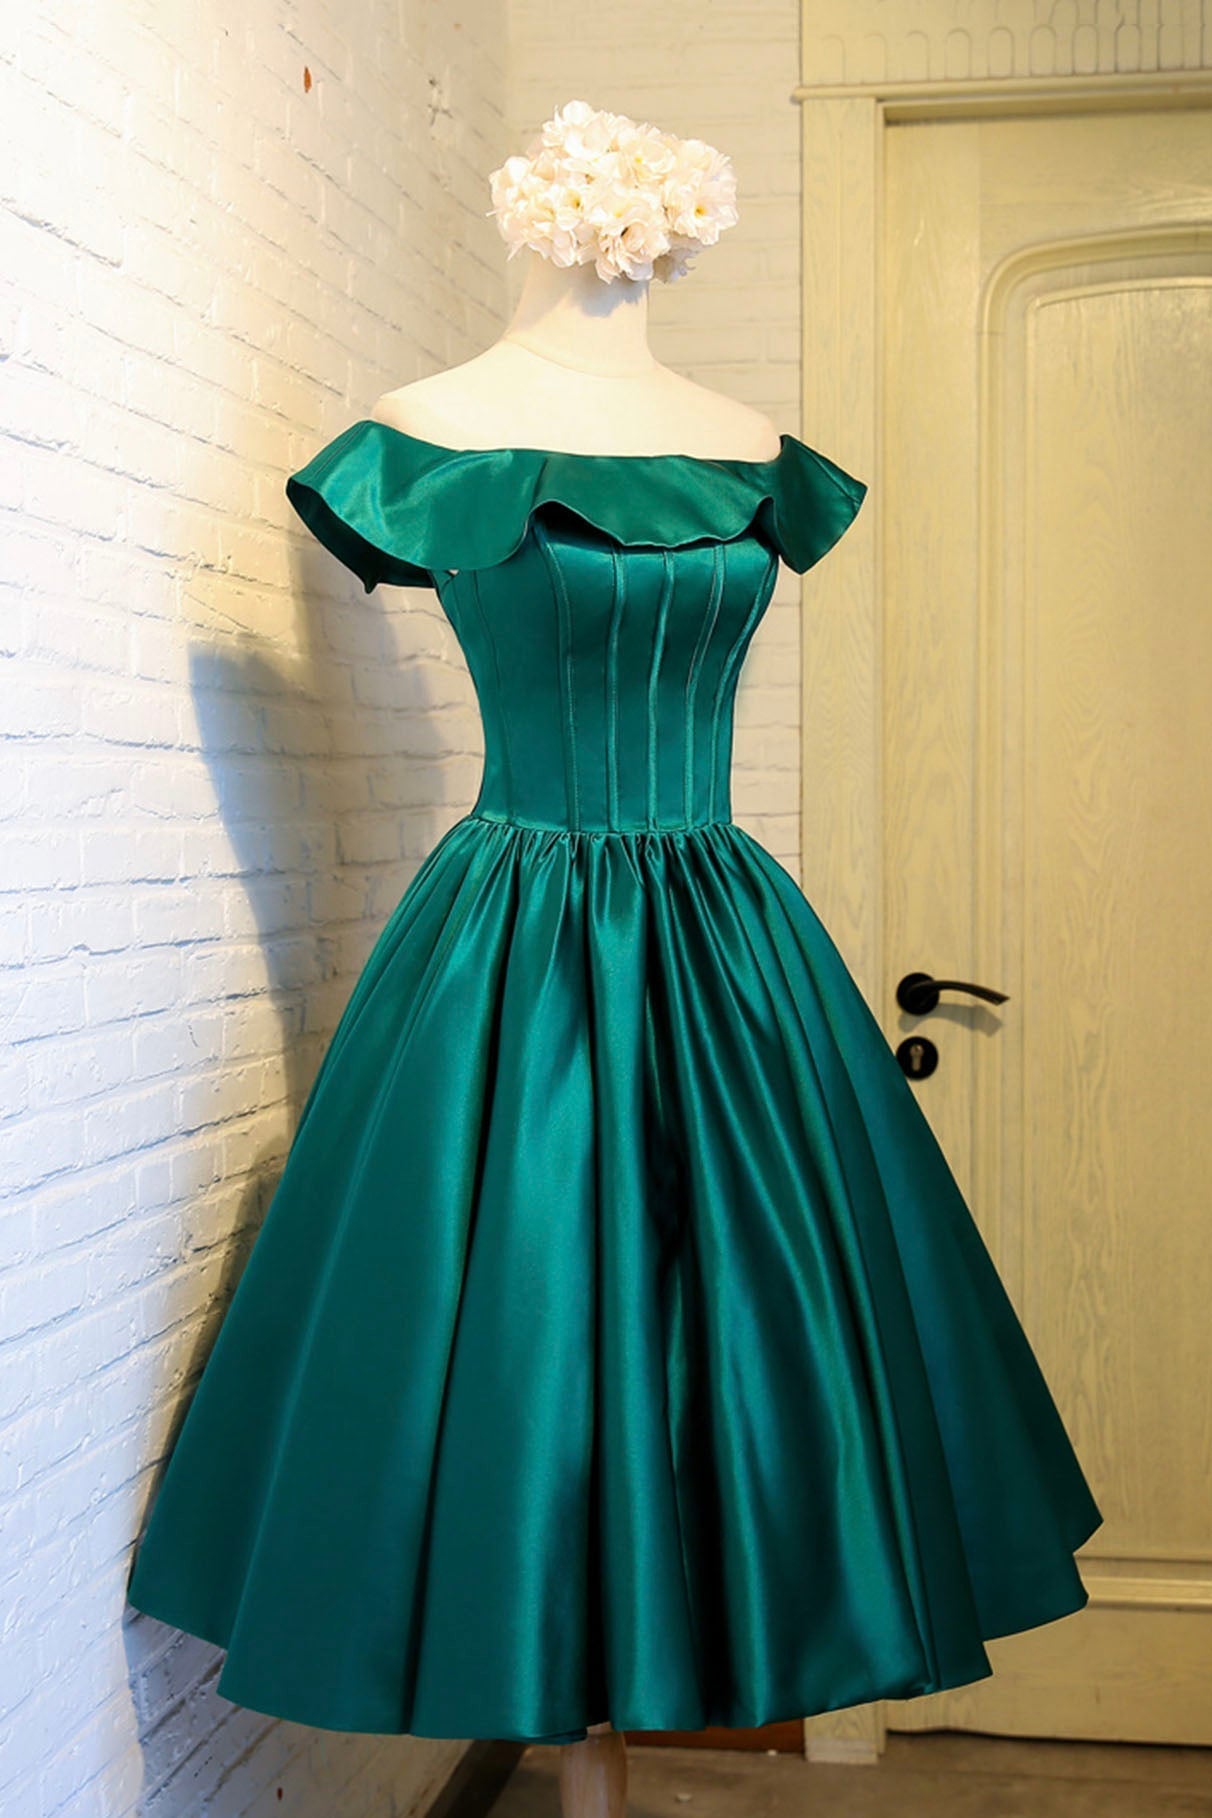 Green Satin Short Homecoming Dress, Cute Off the Shoulder Knee Length Prom Dress